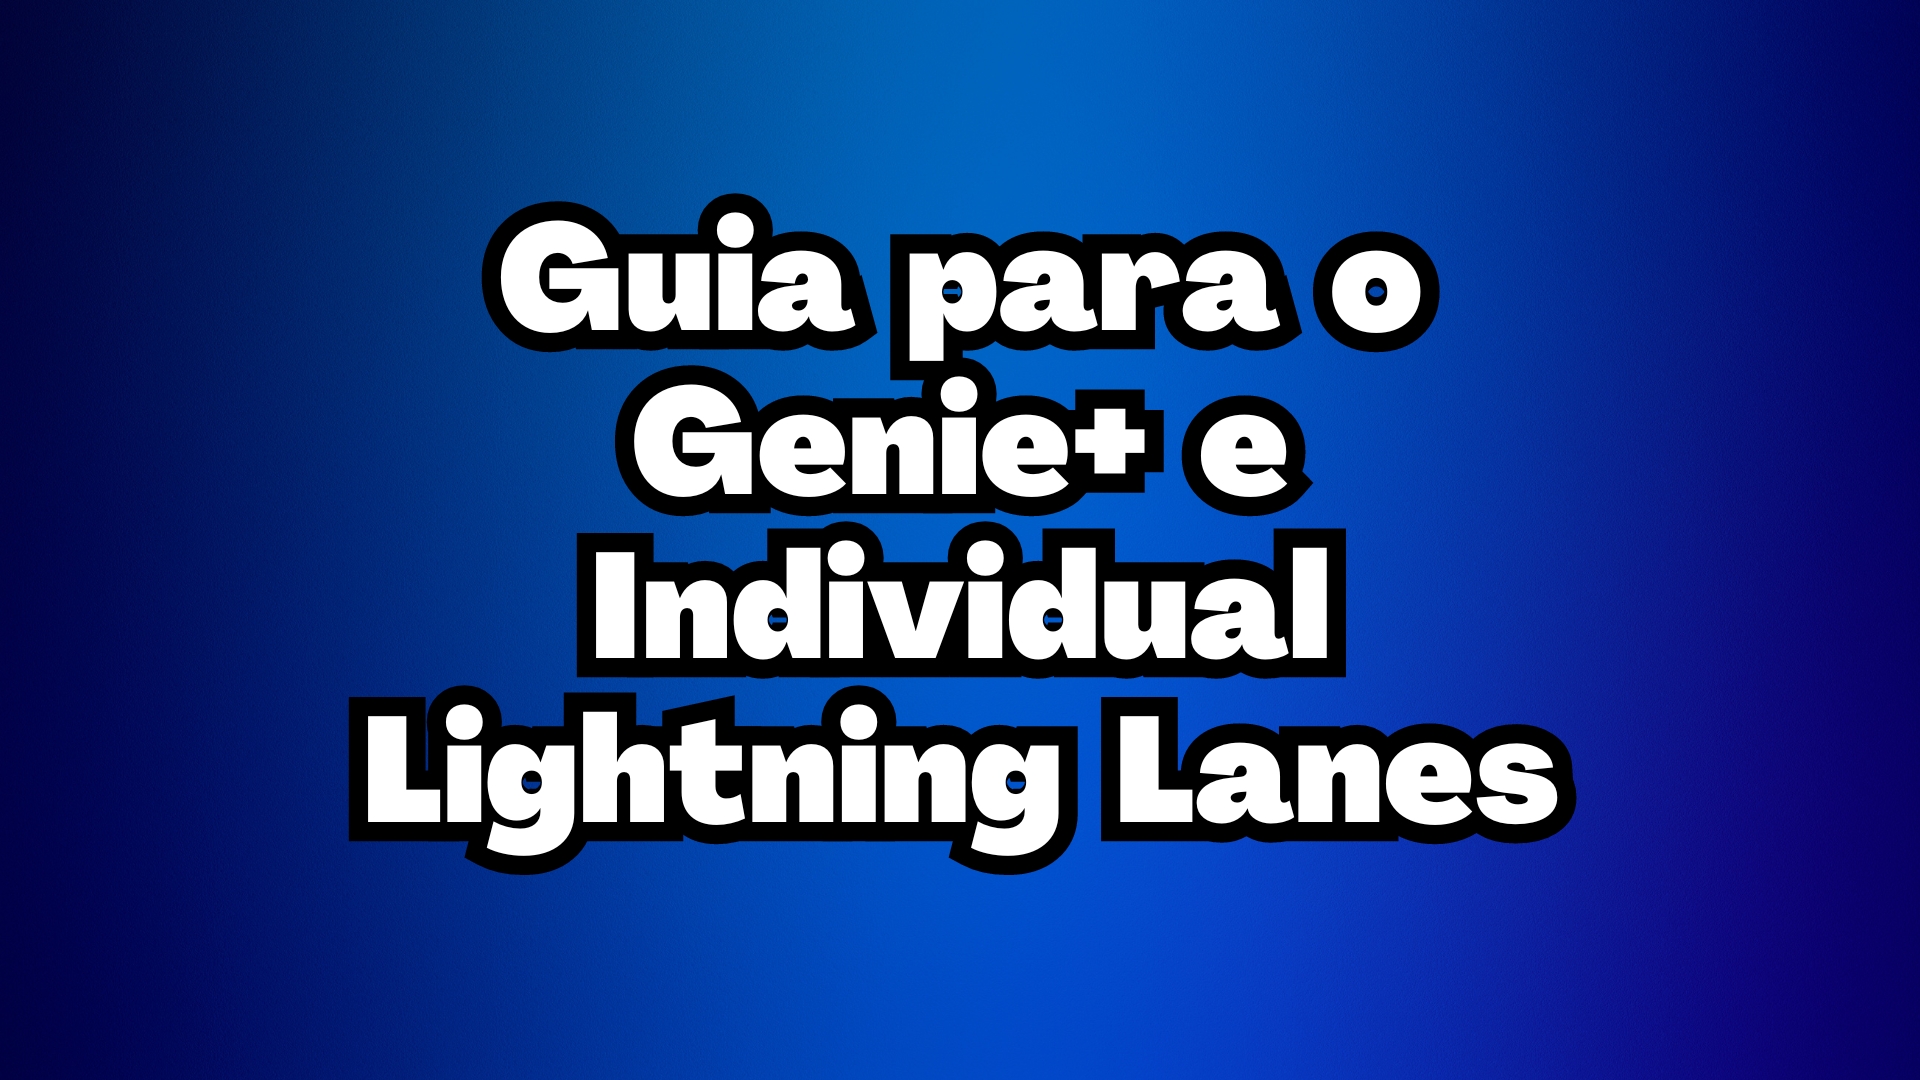 Guia para o Genie+ e Individual Lightning Lane